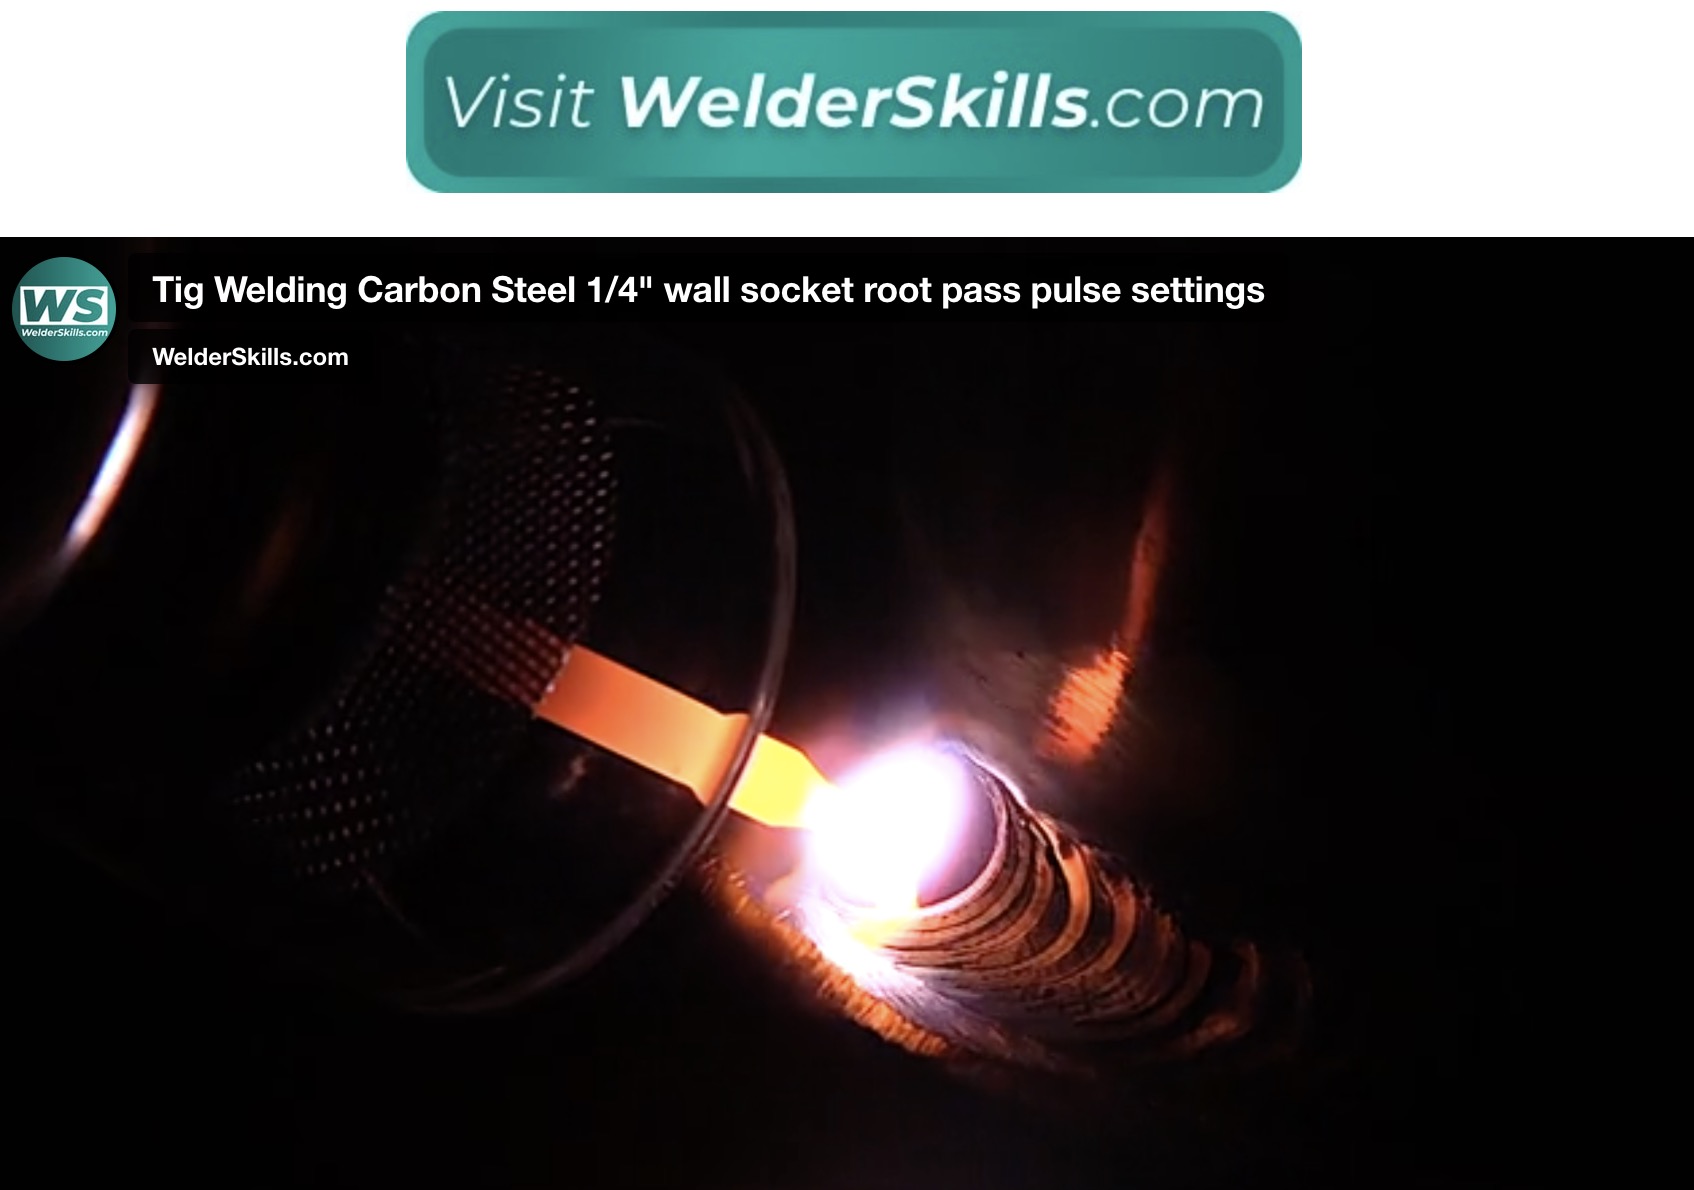 tig welding carbon steel with pulse